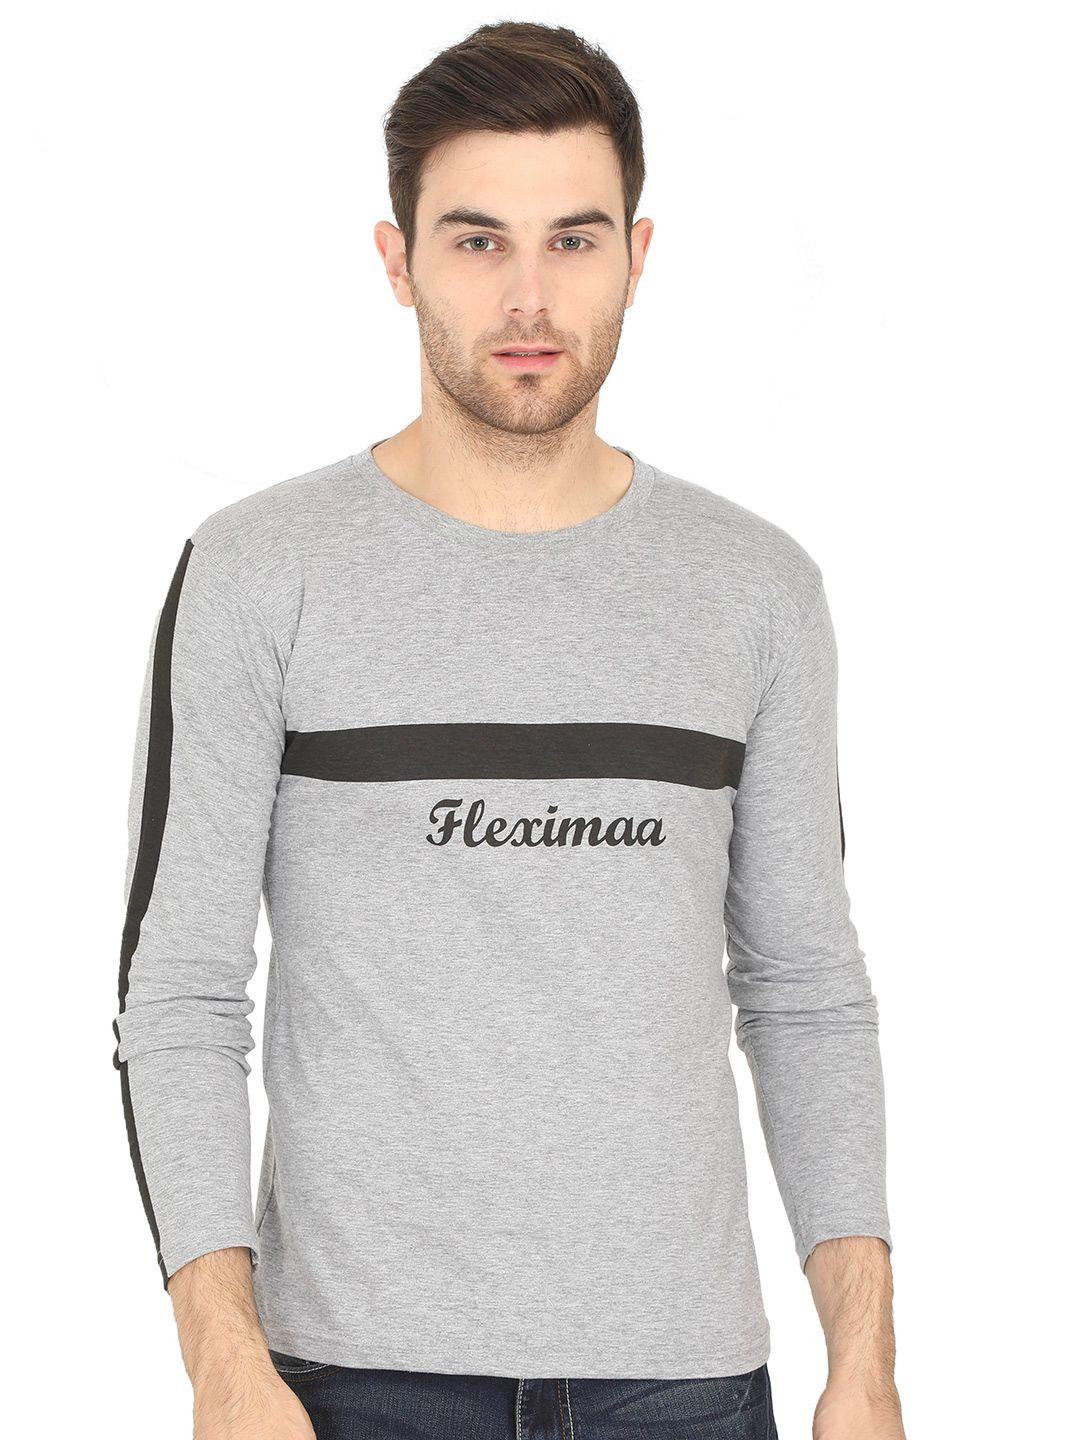 fleximaa men grey melange cotton t-shirt